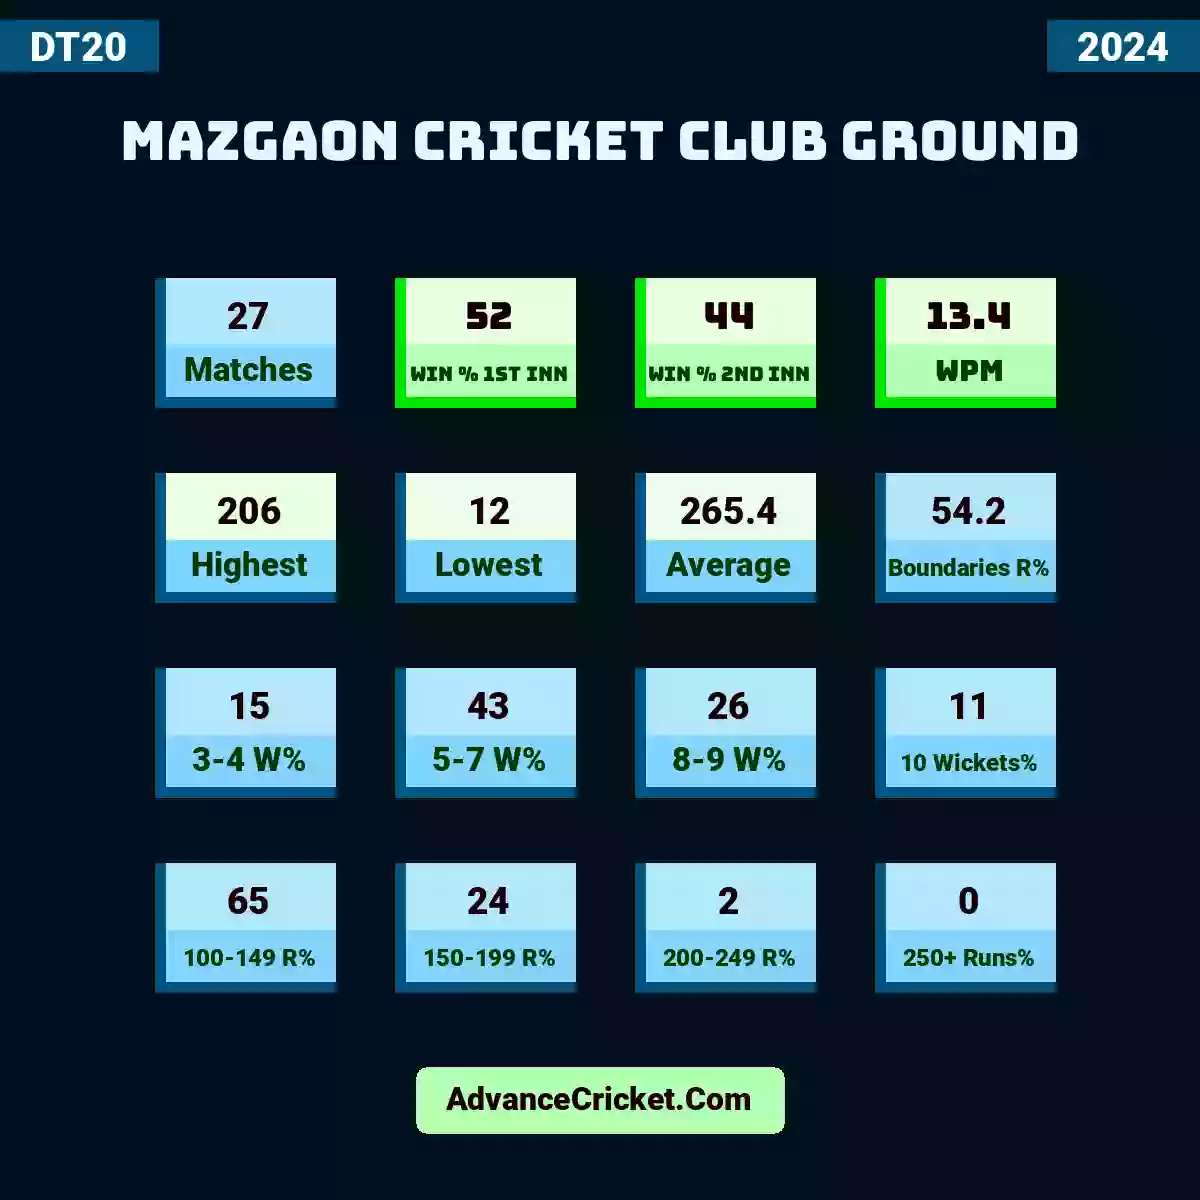 Image showing Mazgaon Cricket Club Ground with Matches: 27, Win % 1st Inn: 52, Win % 2nd Inn: 44, WPM: 13.4, Highest: 206, Lowest: 12, Average: 265.4, Boundaries R%: 54.2, 3-4 W%: 15, 5-7 W%: 43, 8-9 W%: 26, 10 Wickets%: 11, 100-149 R%: 65, 150-199 R%: 24, 200-249 R%: 2, 250+ Runs%: 0.